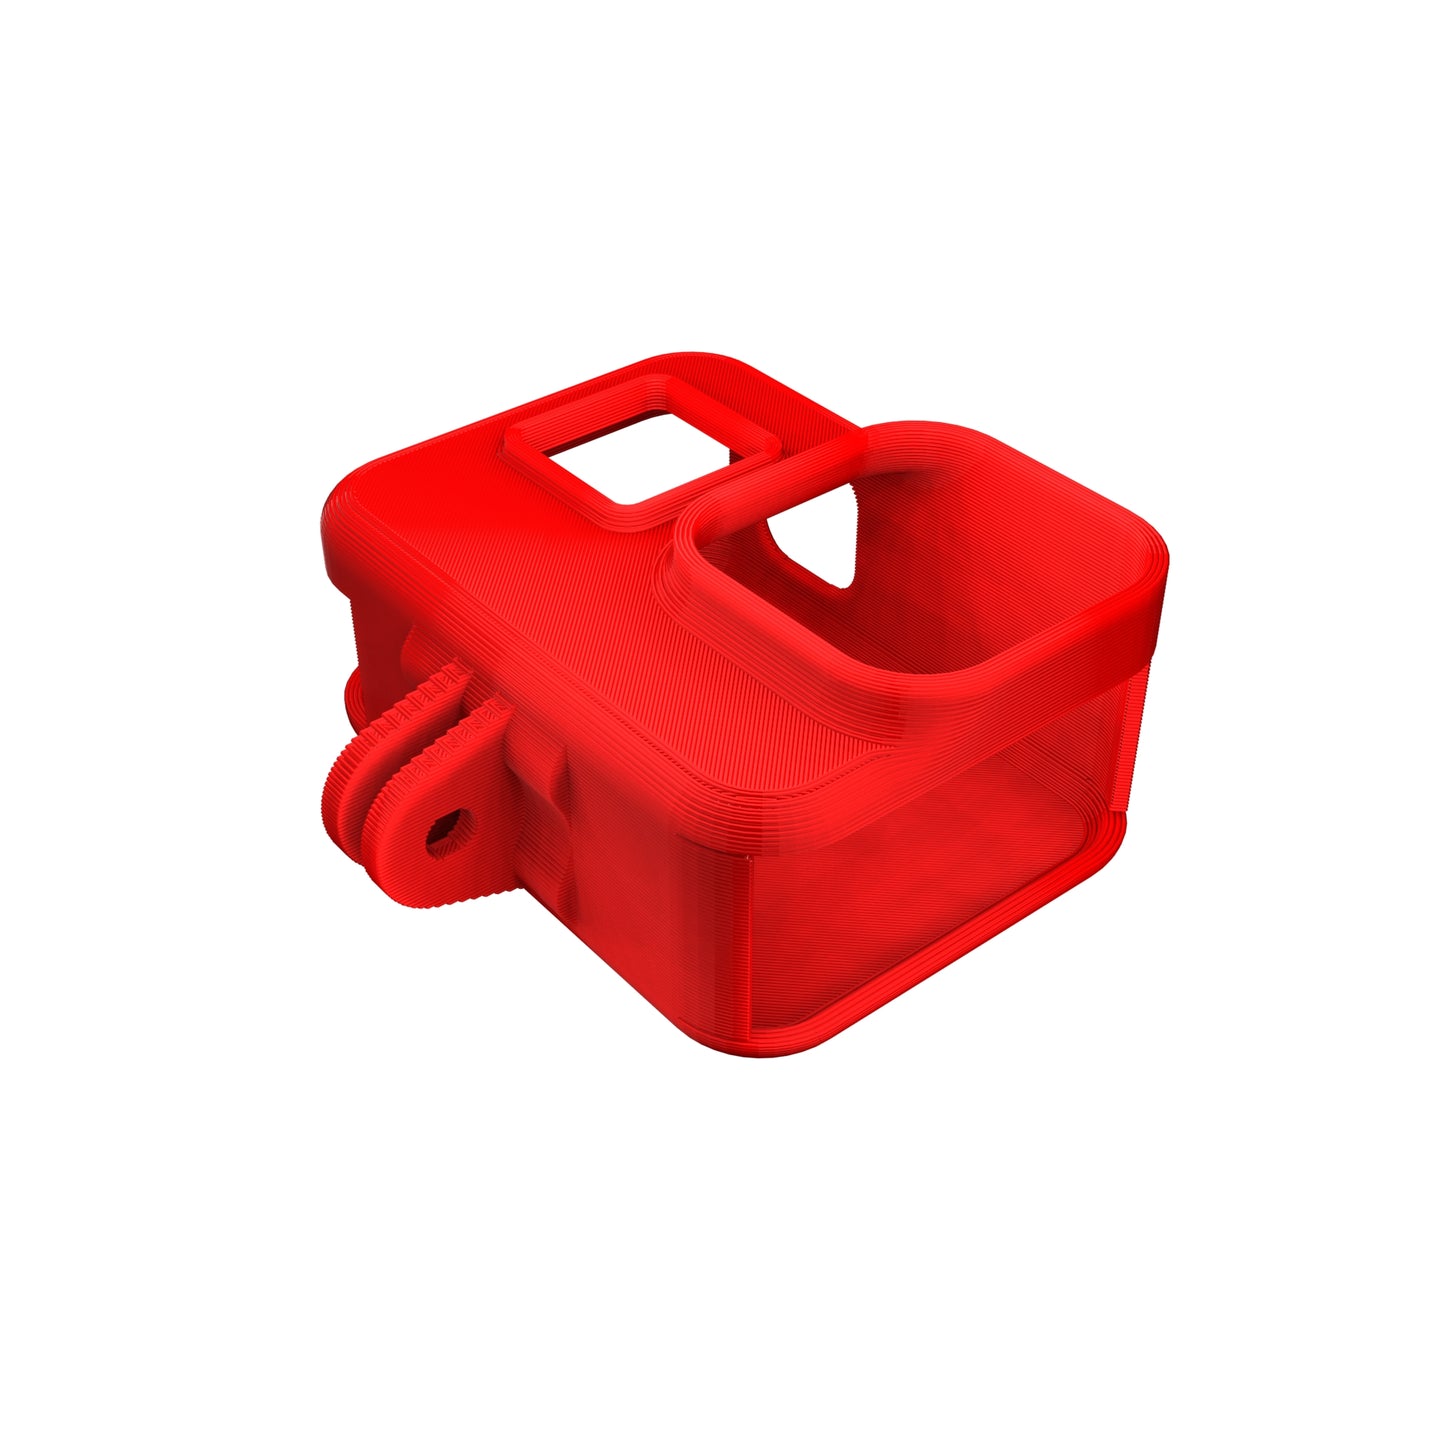 GoPro Hero 8 Regular FPV Case Red 3D Printed Part for FPV